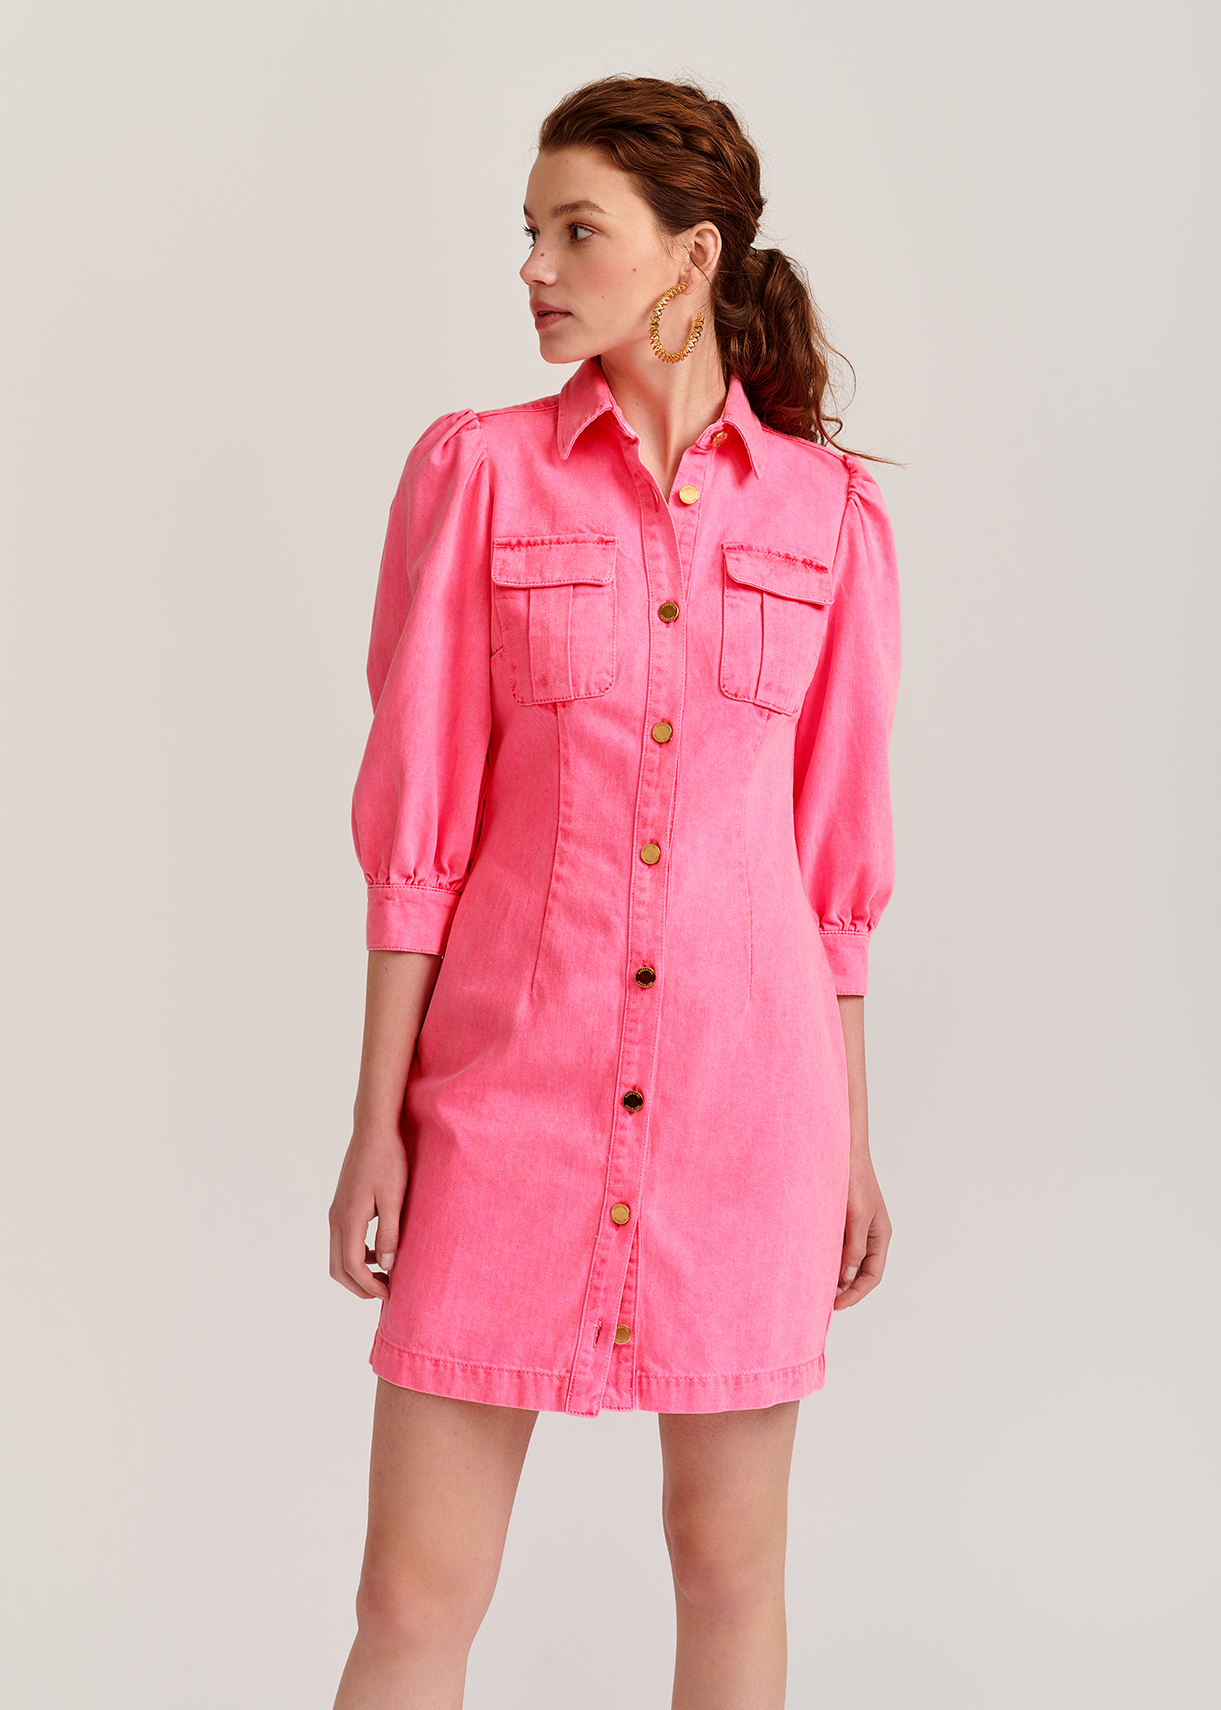 neon pink denim dress